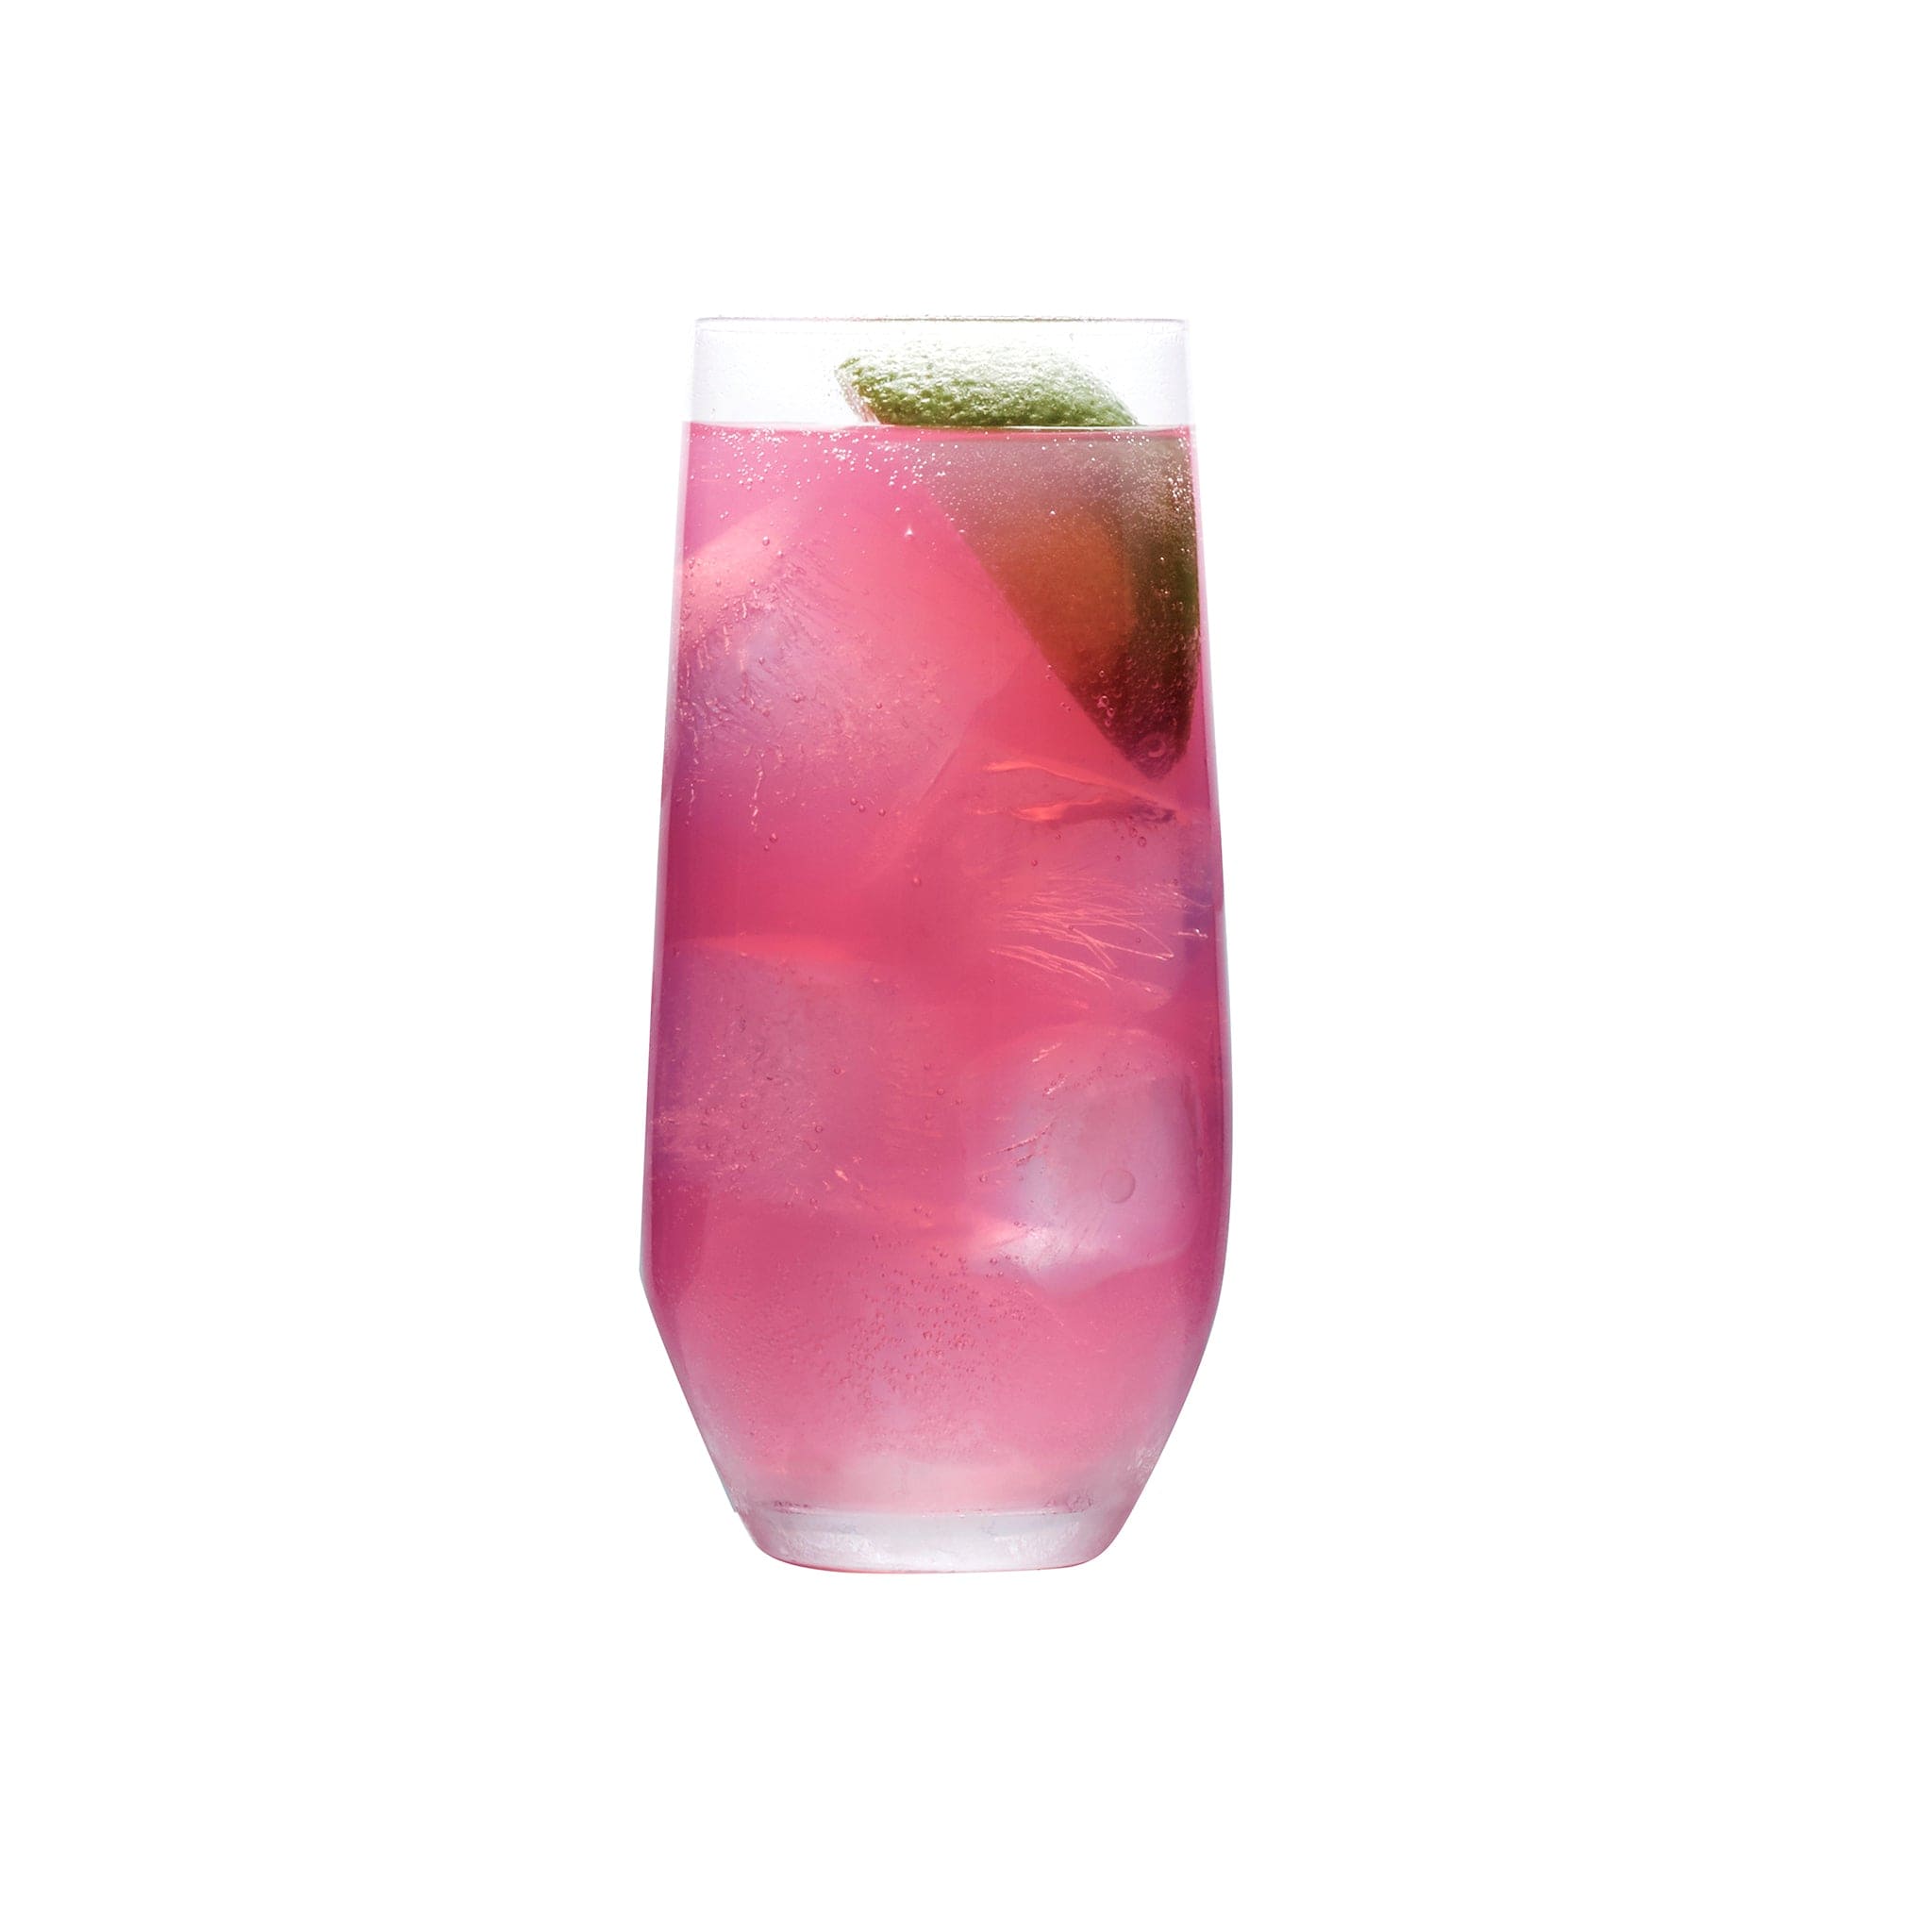 Mikasa Hospitality Martini Glass, Artemis, Clear, 8 oz - Case of 24